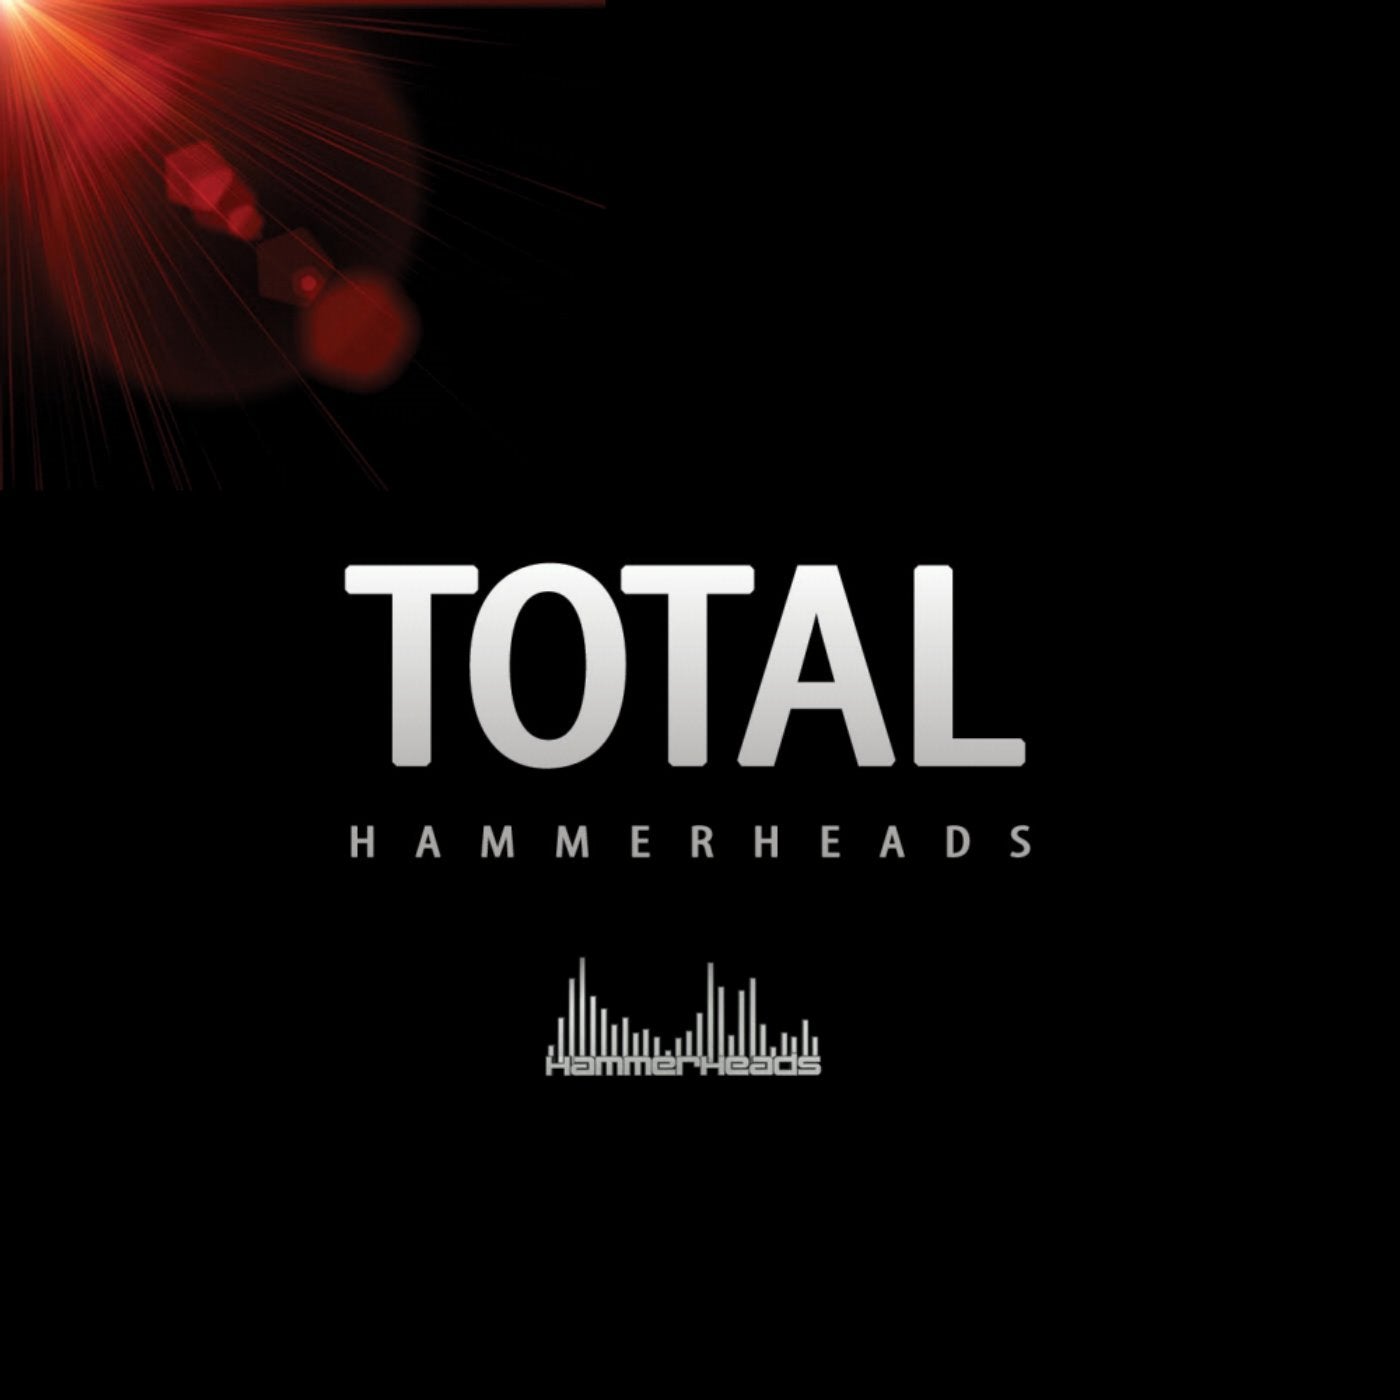 Total Hammerheads